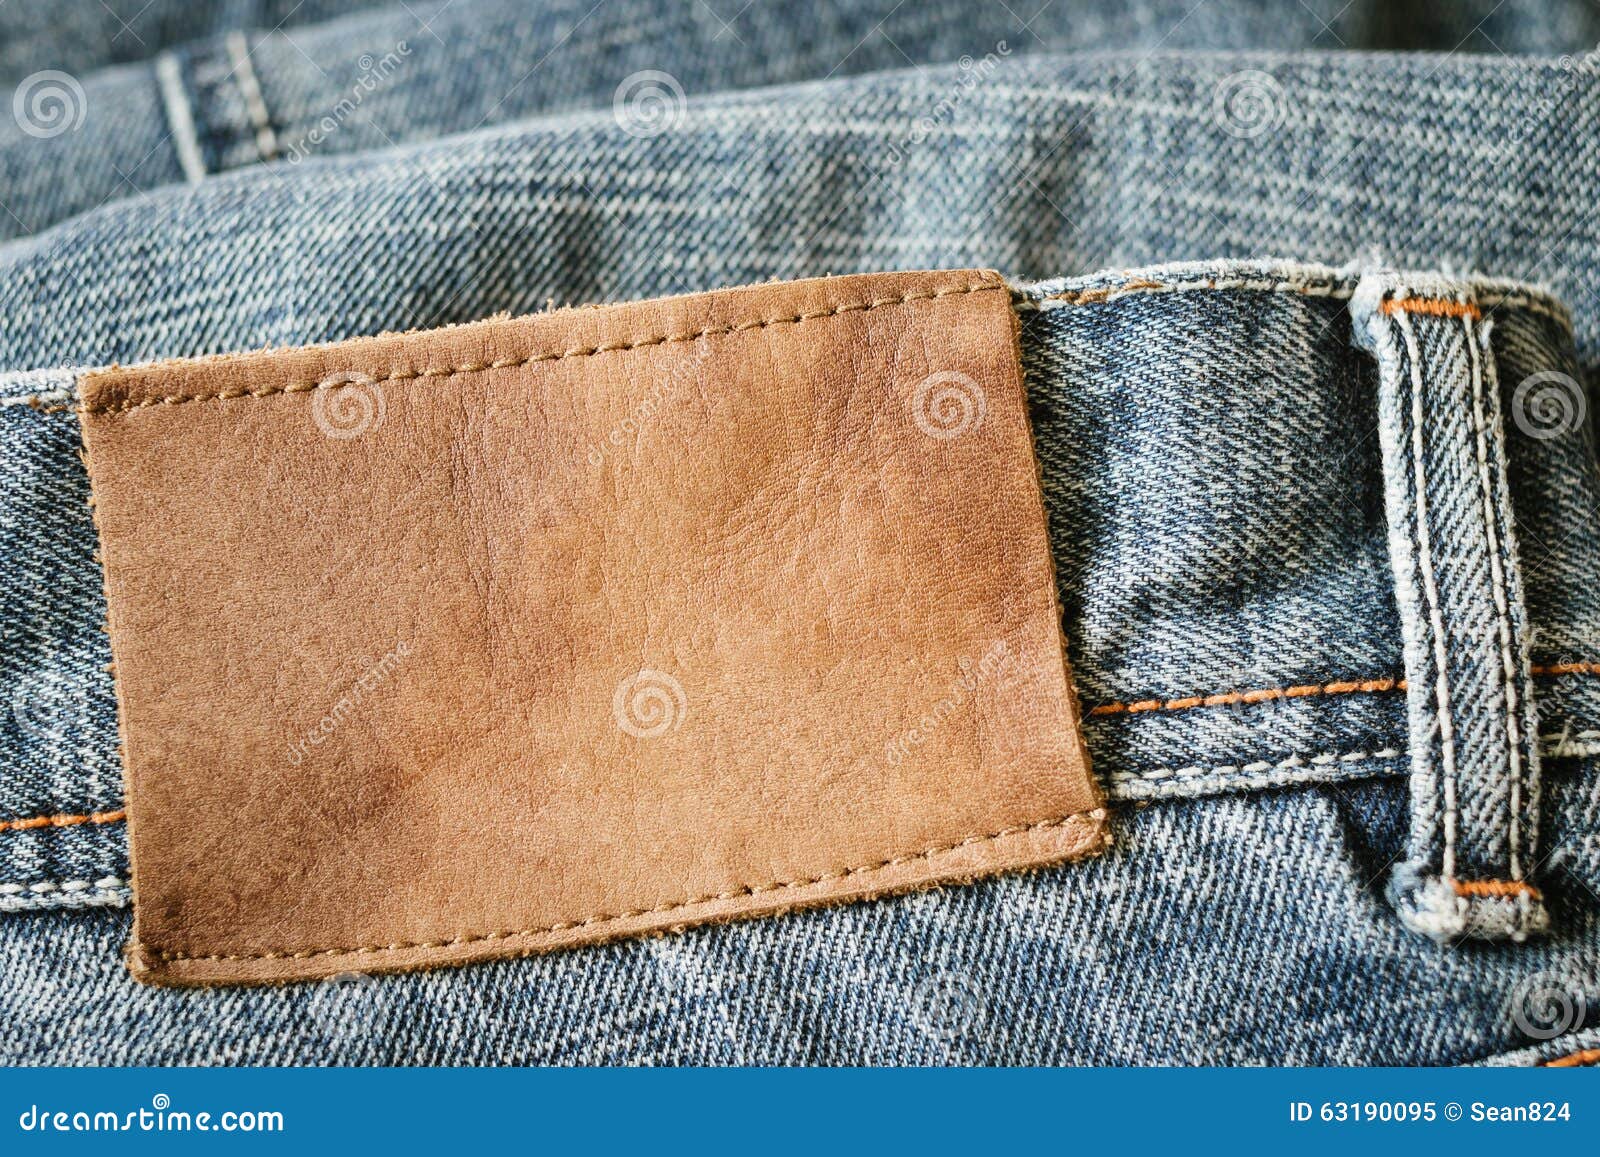 Jeans label stock image. Image of denim, closeup, fashion - 63190095